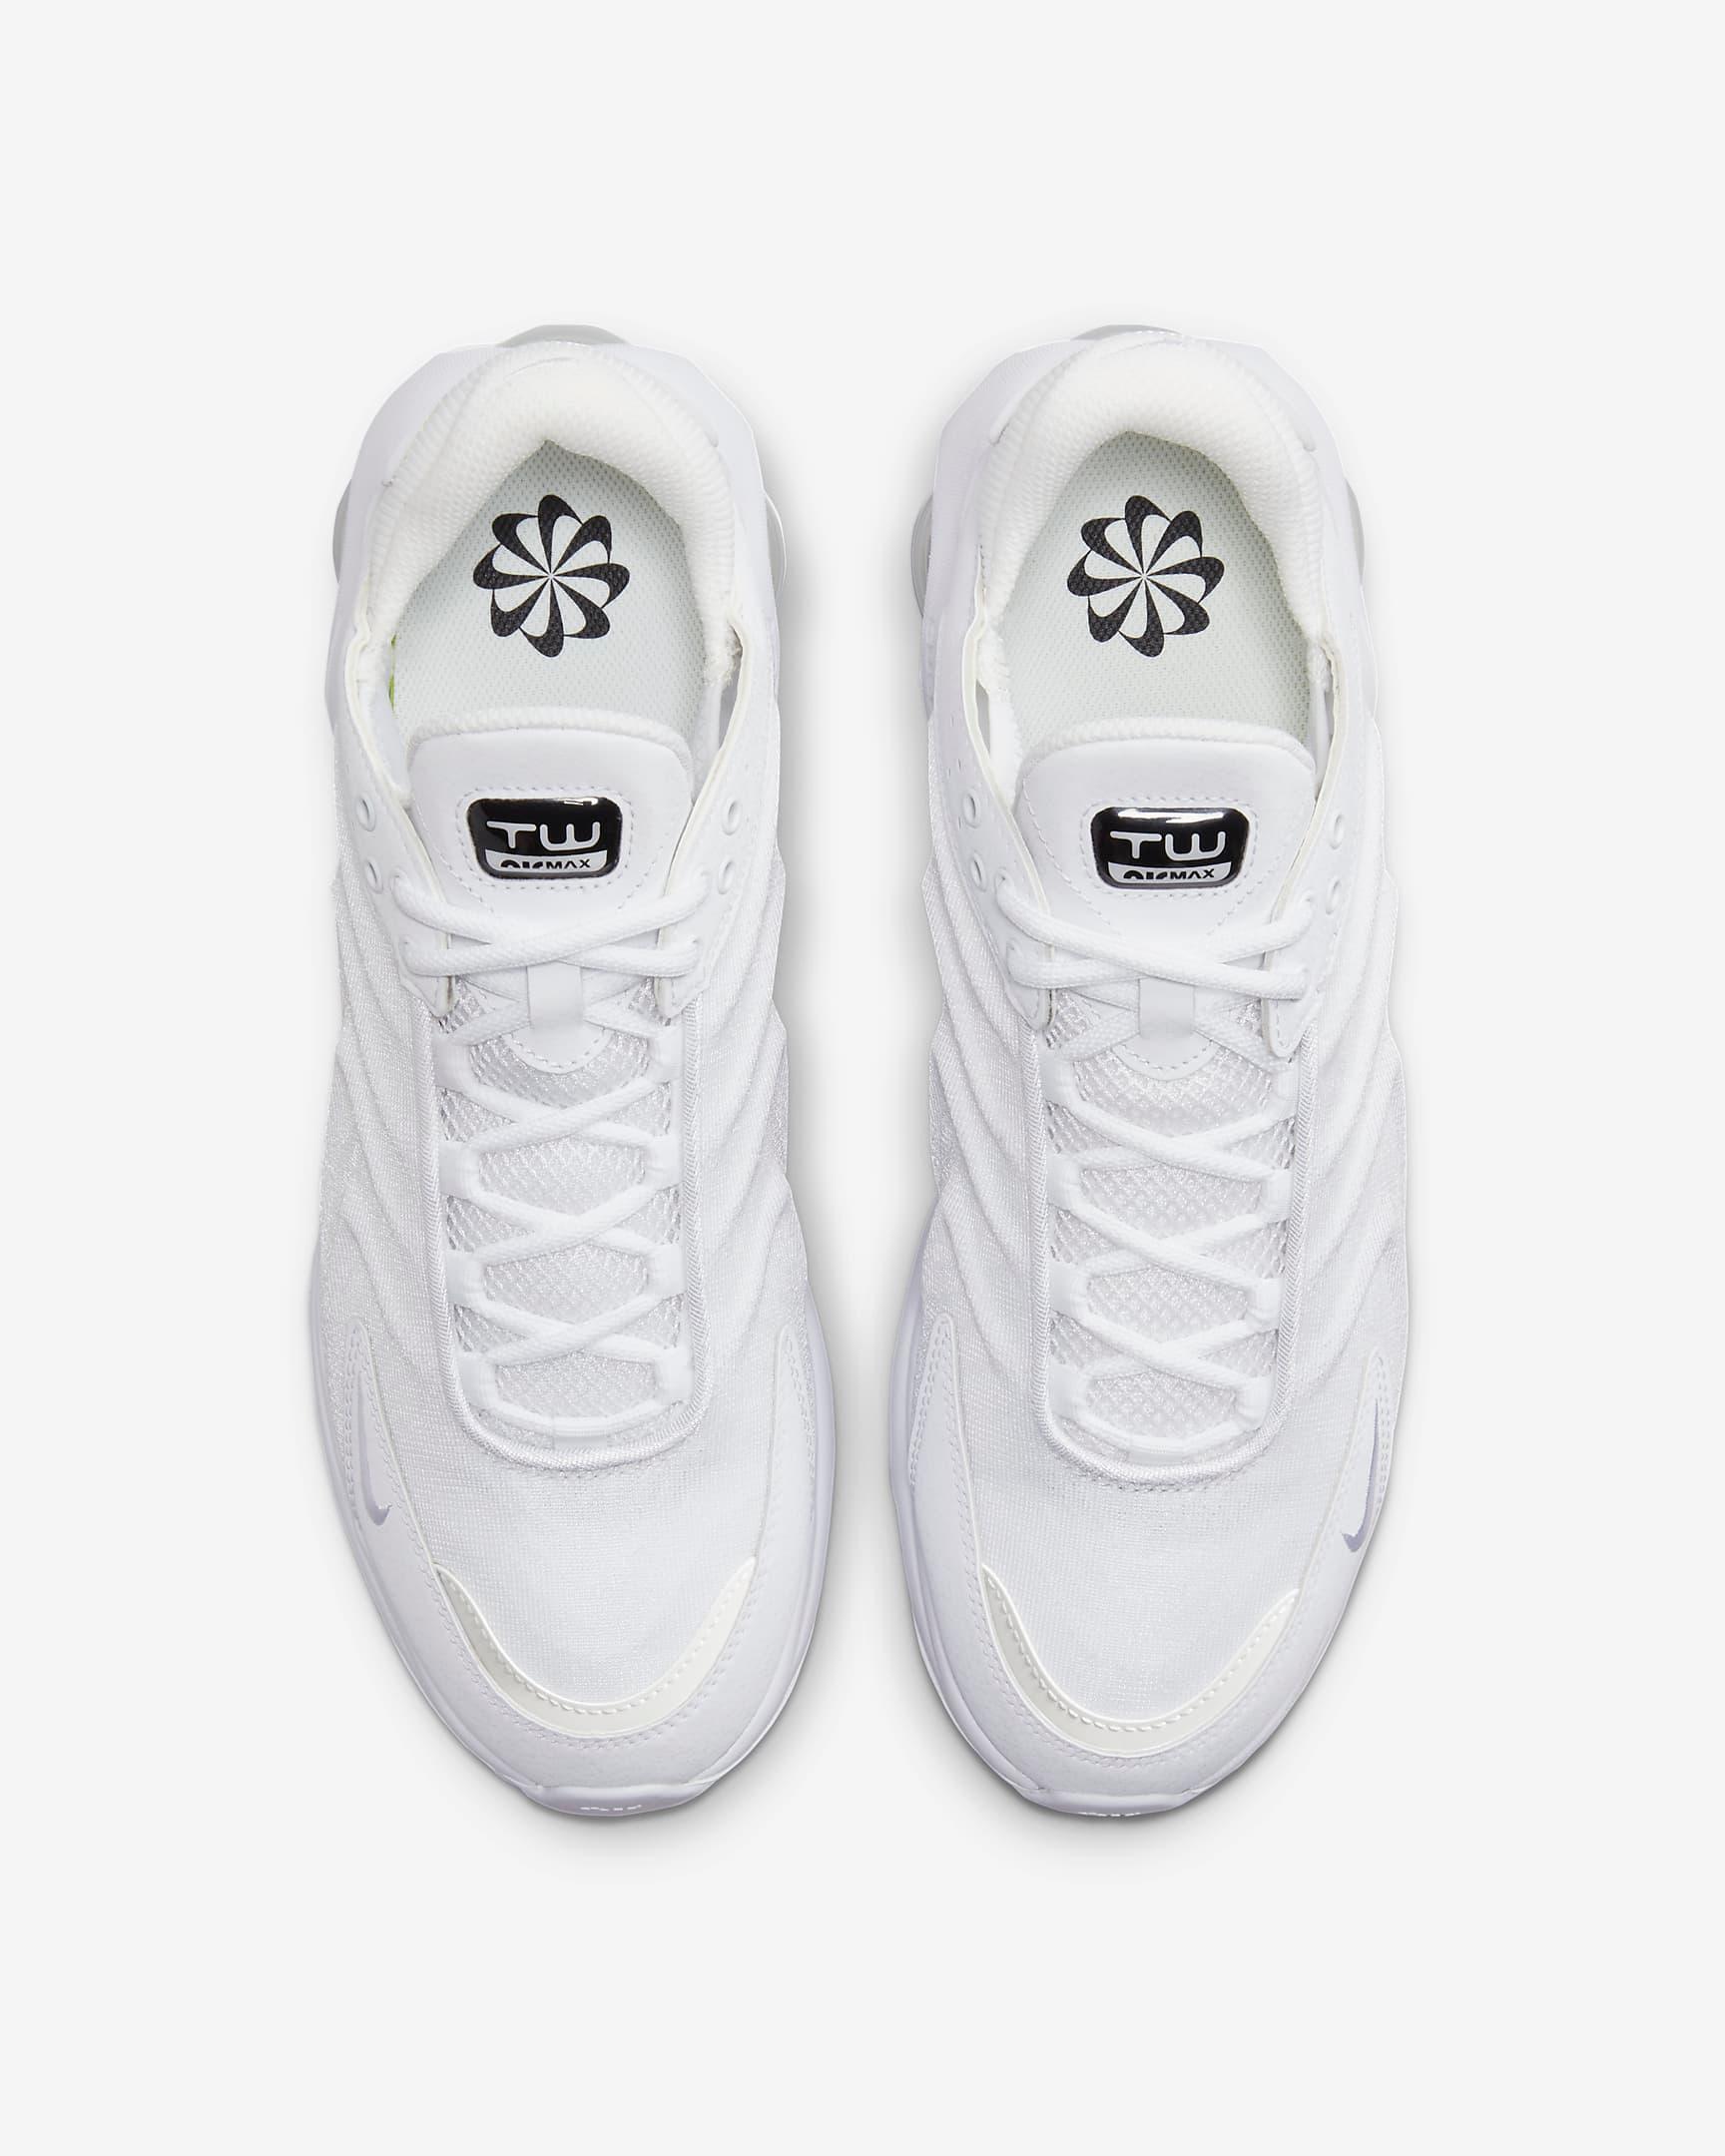 Giày Nike Air Max TW Men Shoes #White - Kallos Vietnam